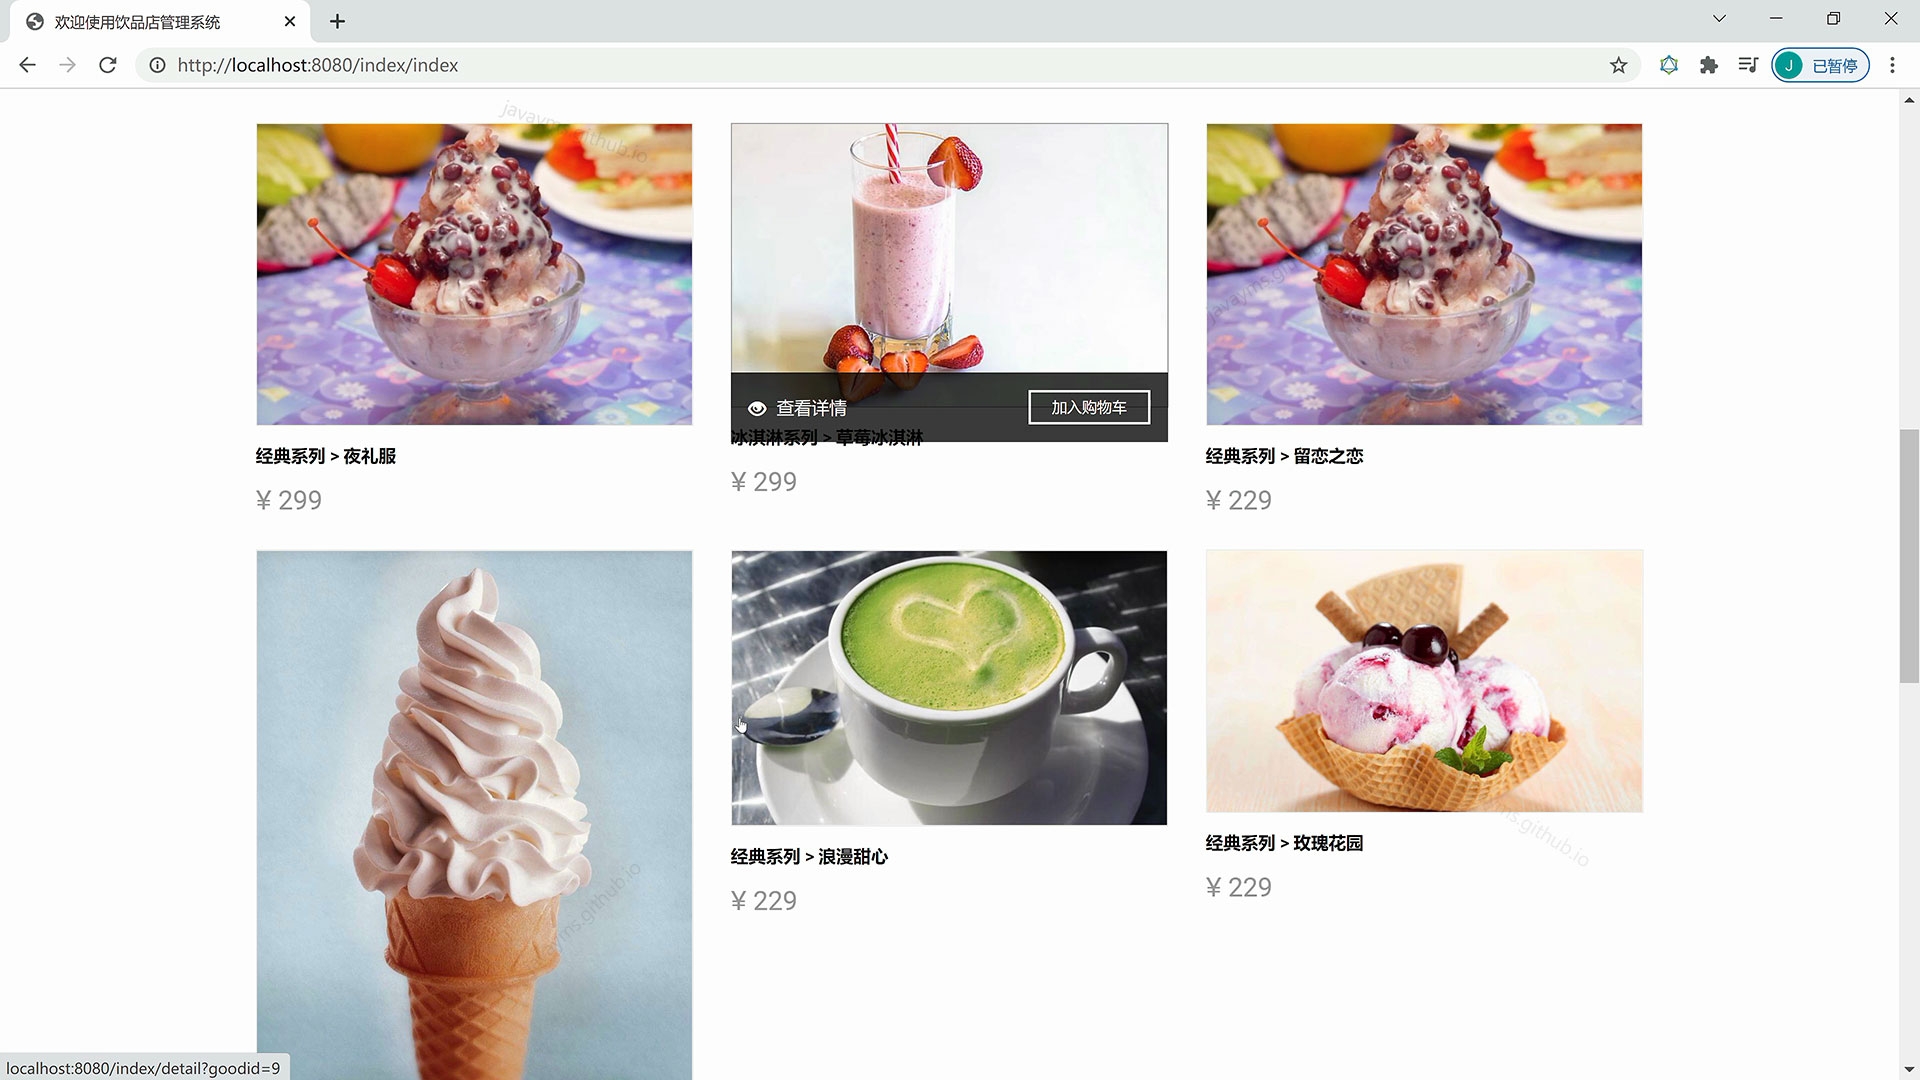 javaweb 甜品冰淇淋奶茶店网上订餐系统(前台、后台)